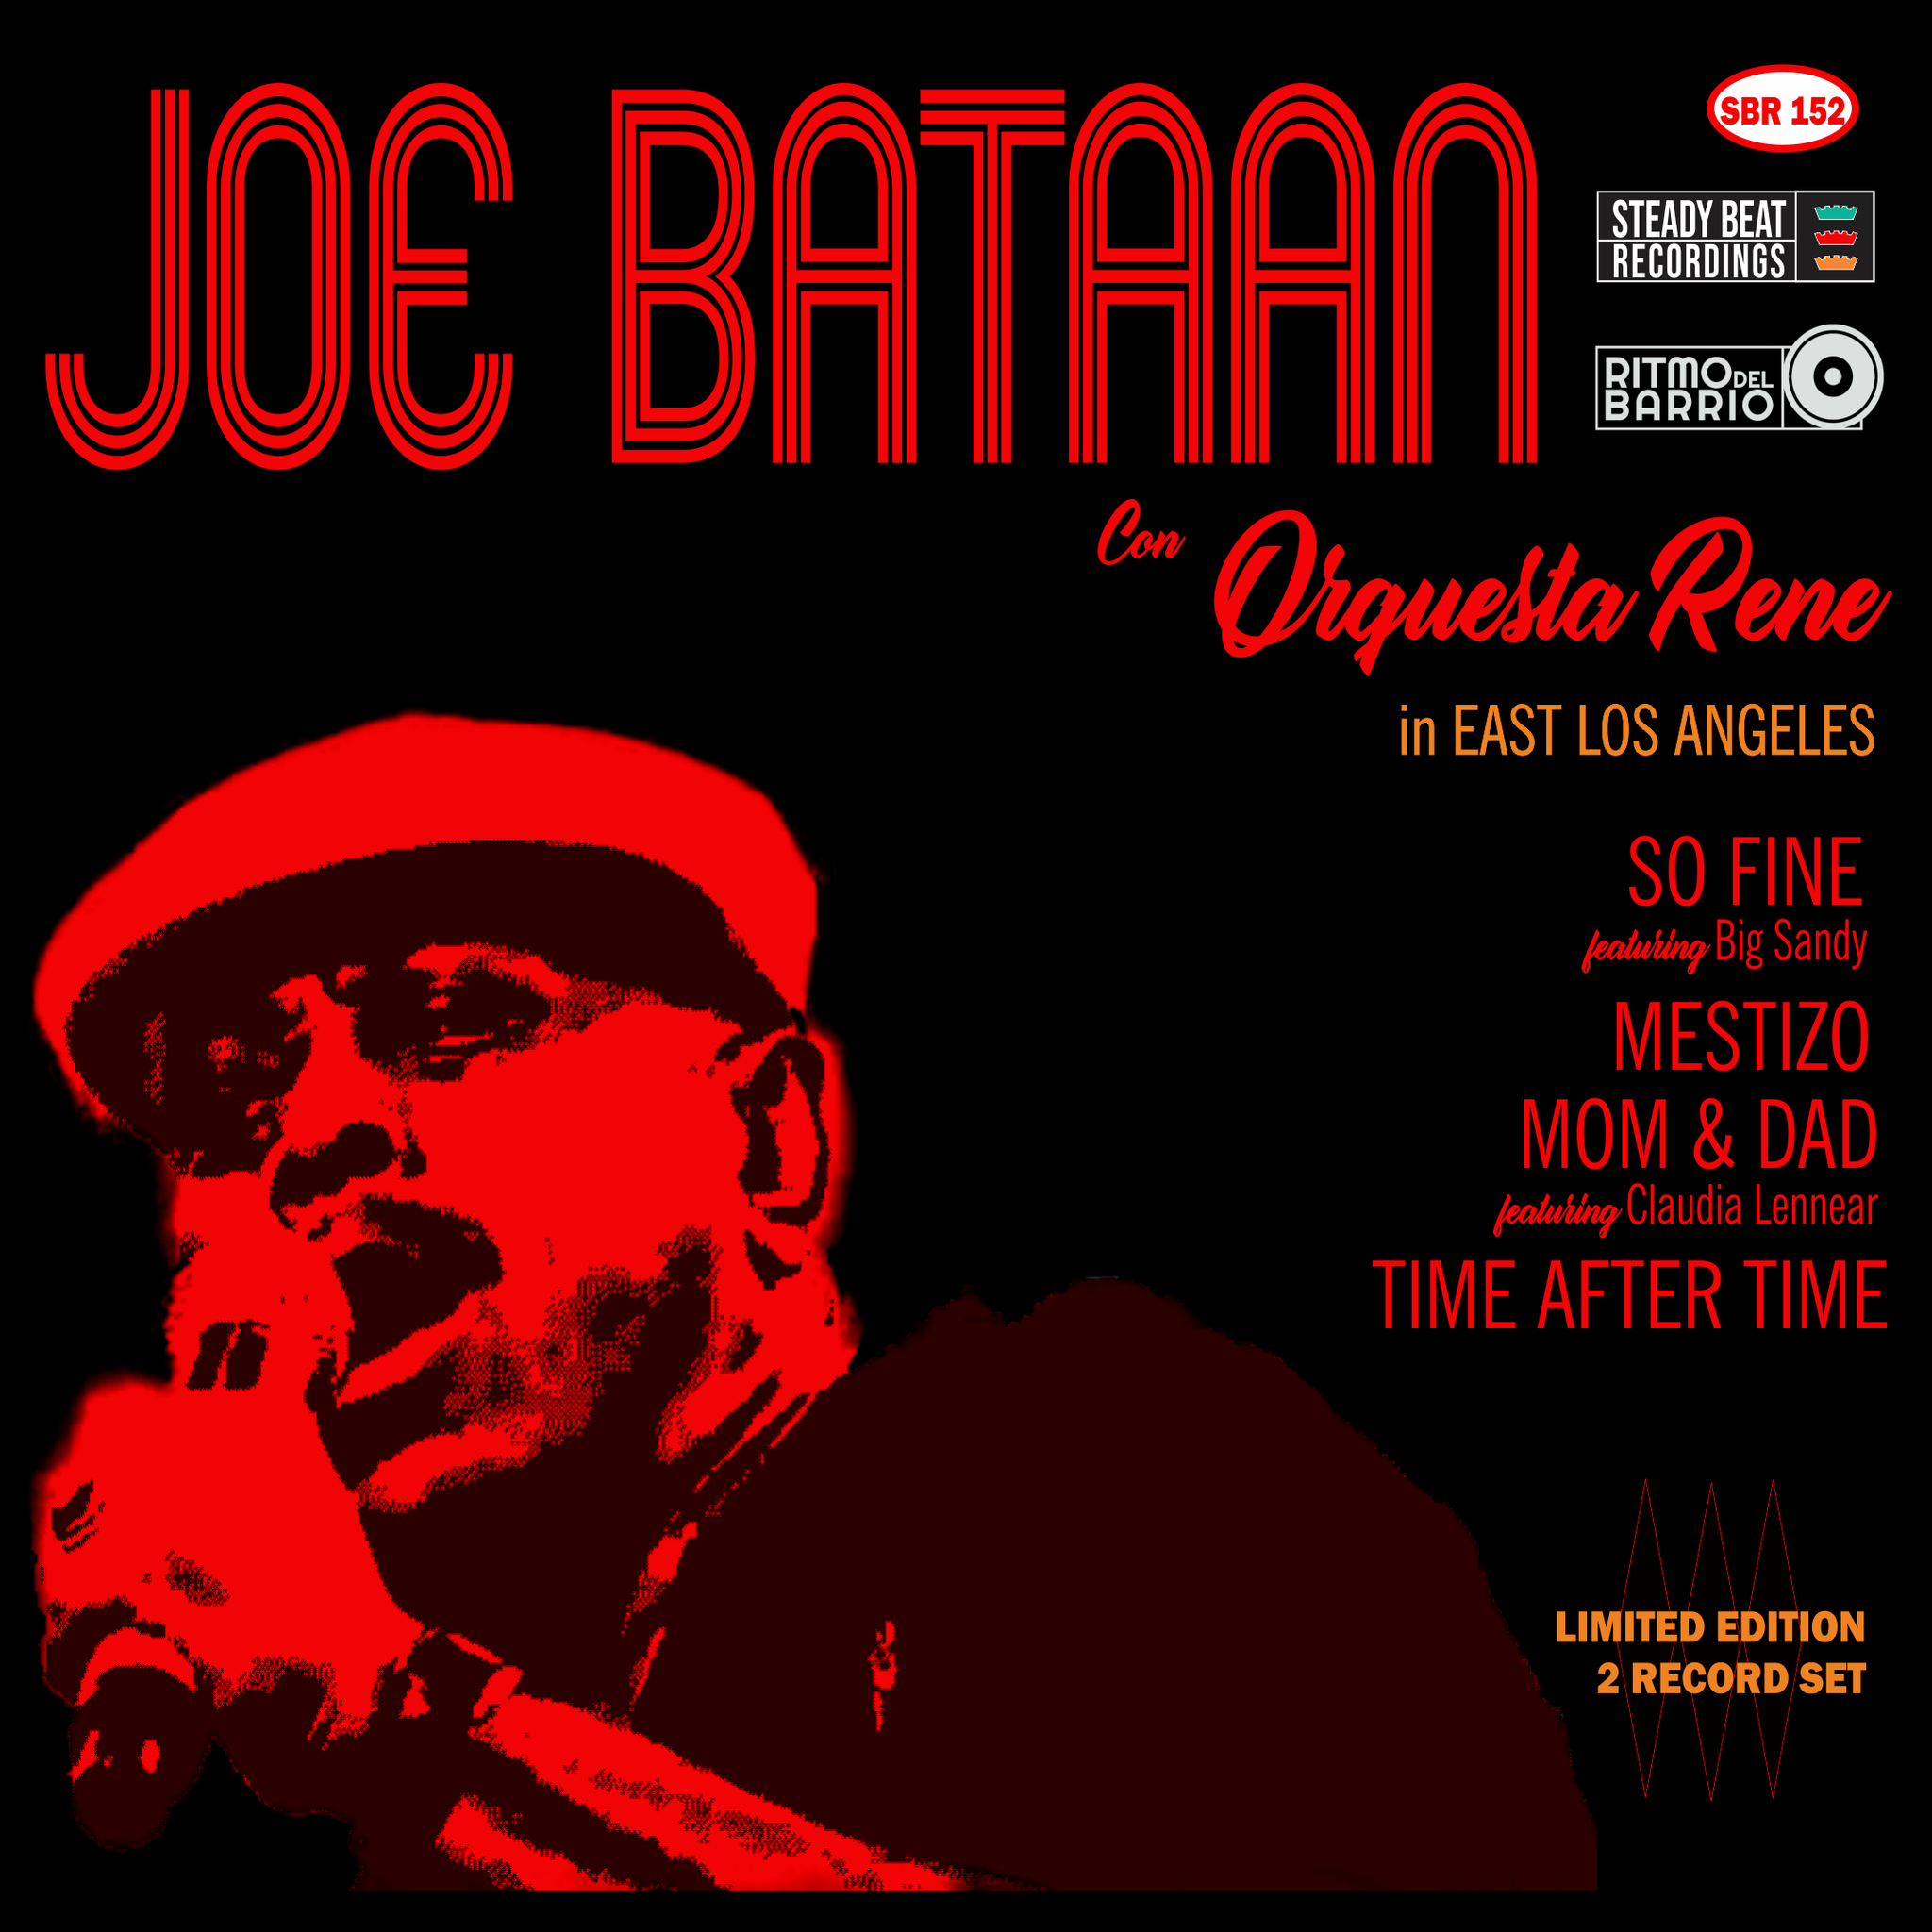 JOE BATAAN CON ORQUESTA RENE - IN EAST LOS ANGELES Vinyl 2x7"